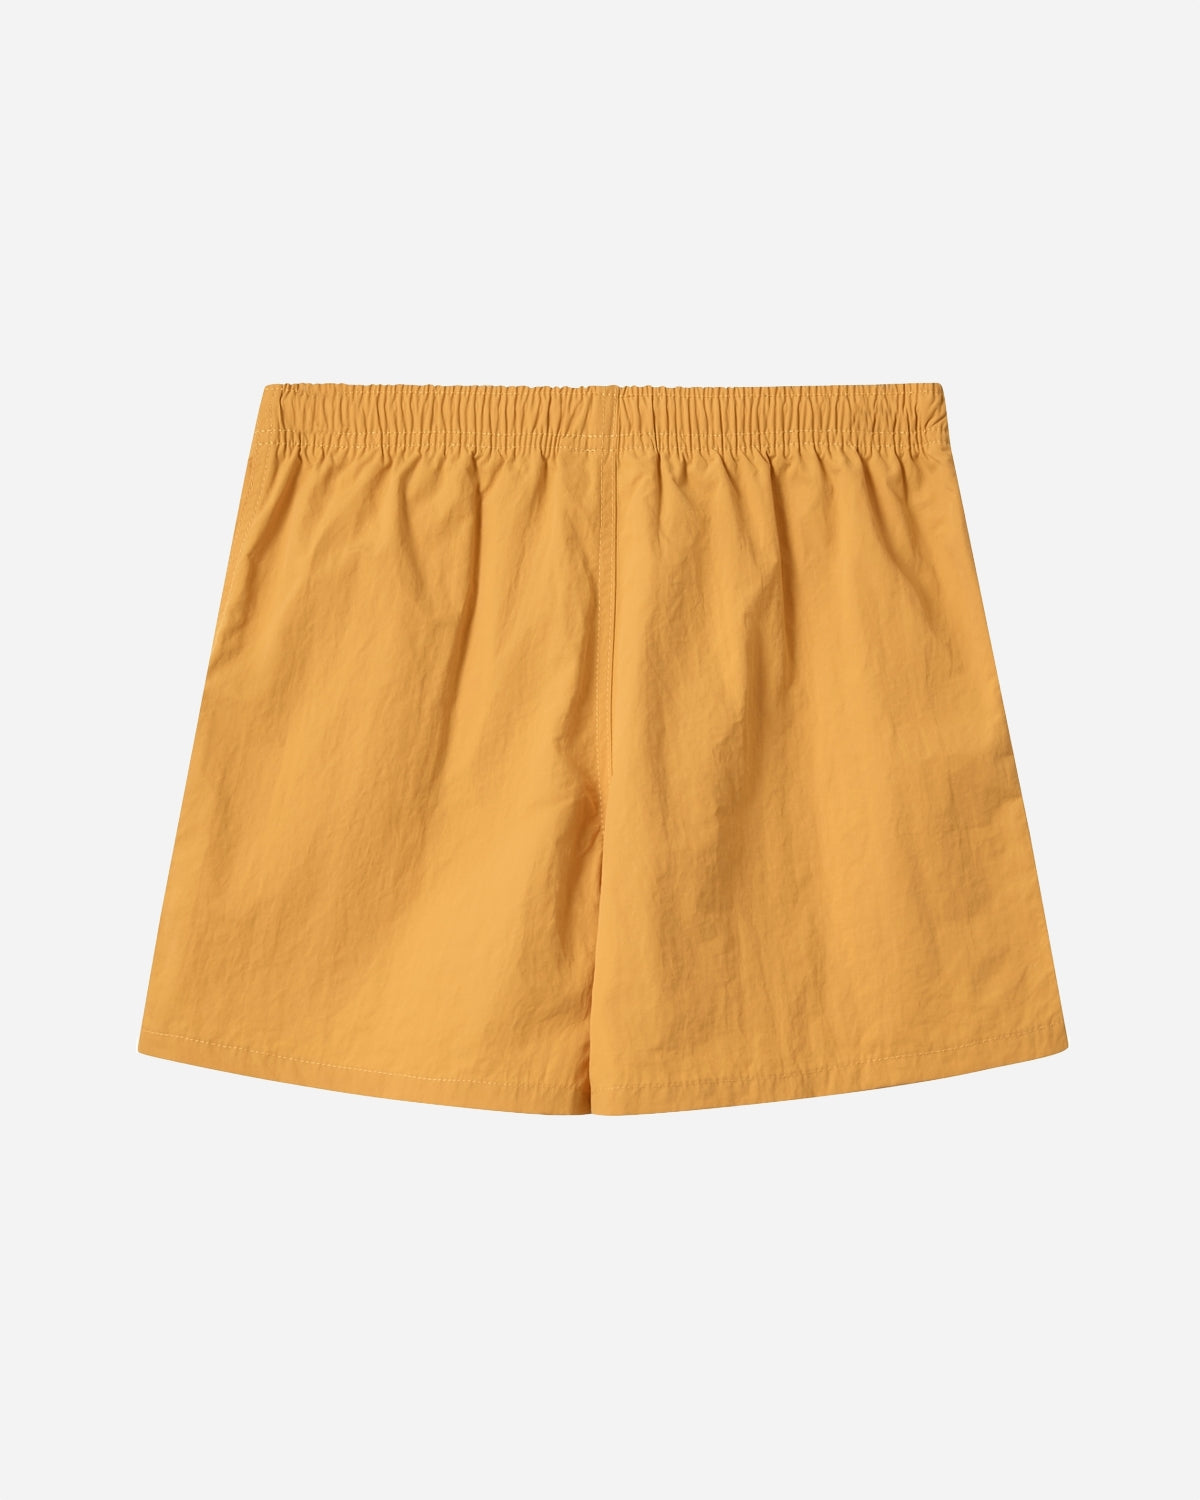 Leisure Woman Swim Shorts - Apricot